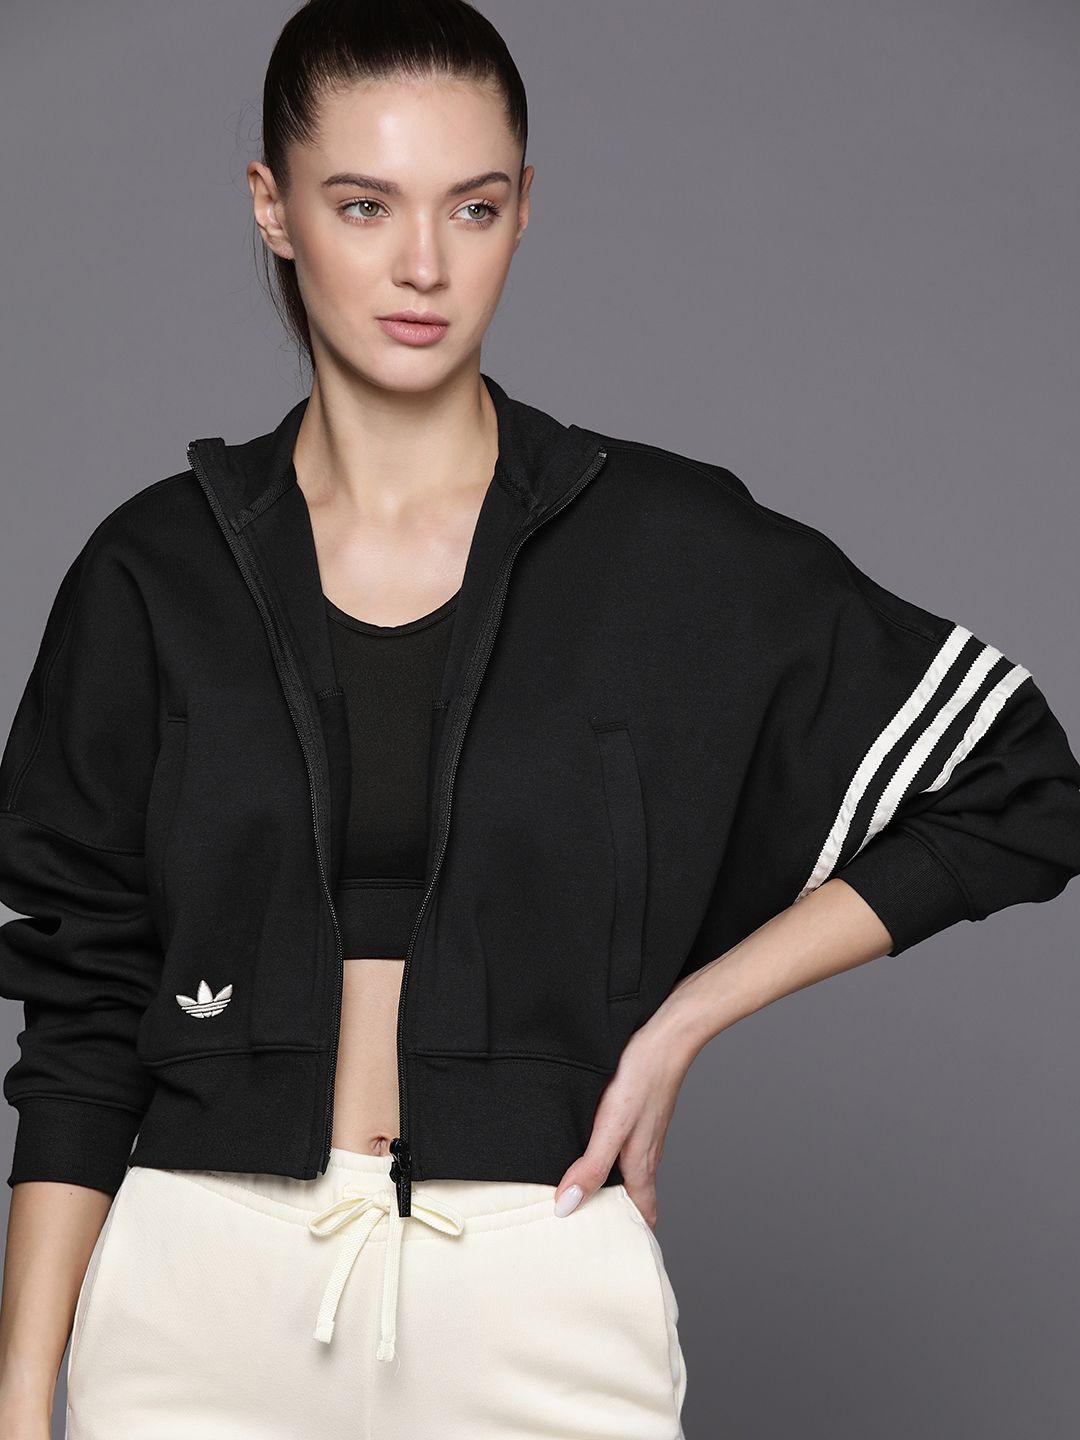 adidas-originals-women-crop-track-top-tailored-jacket